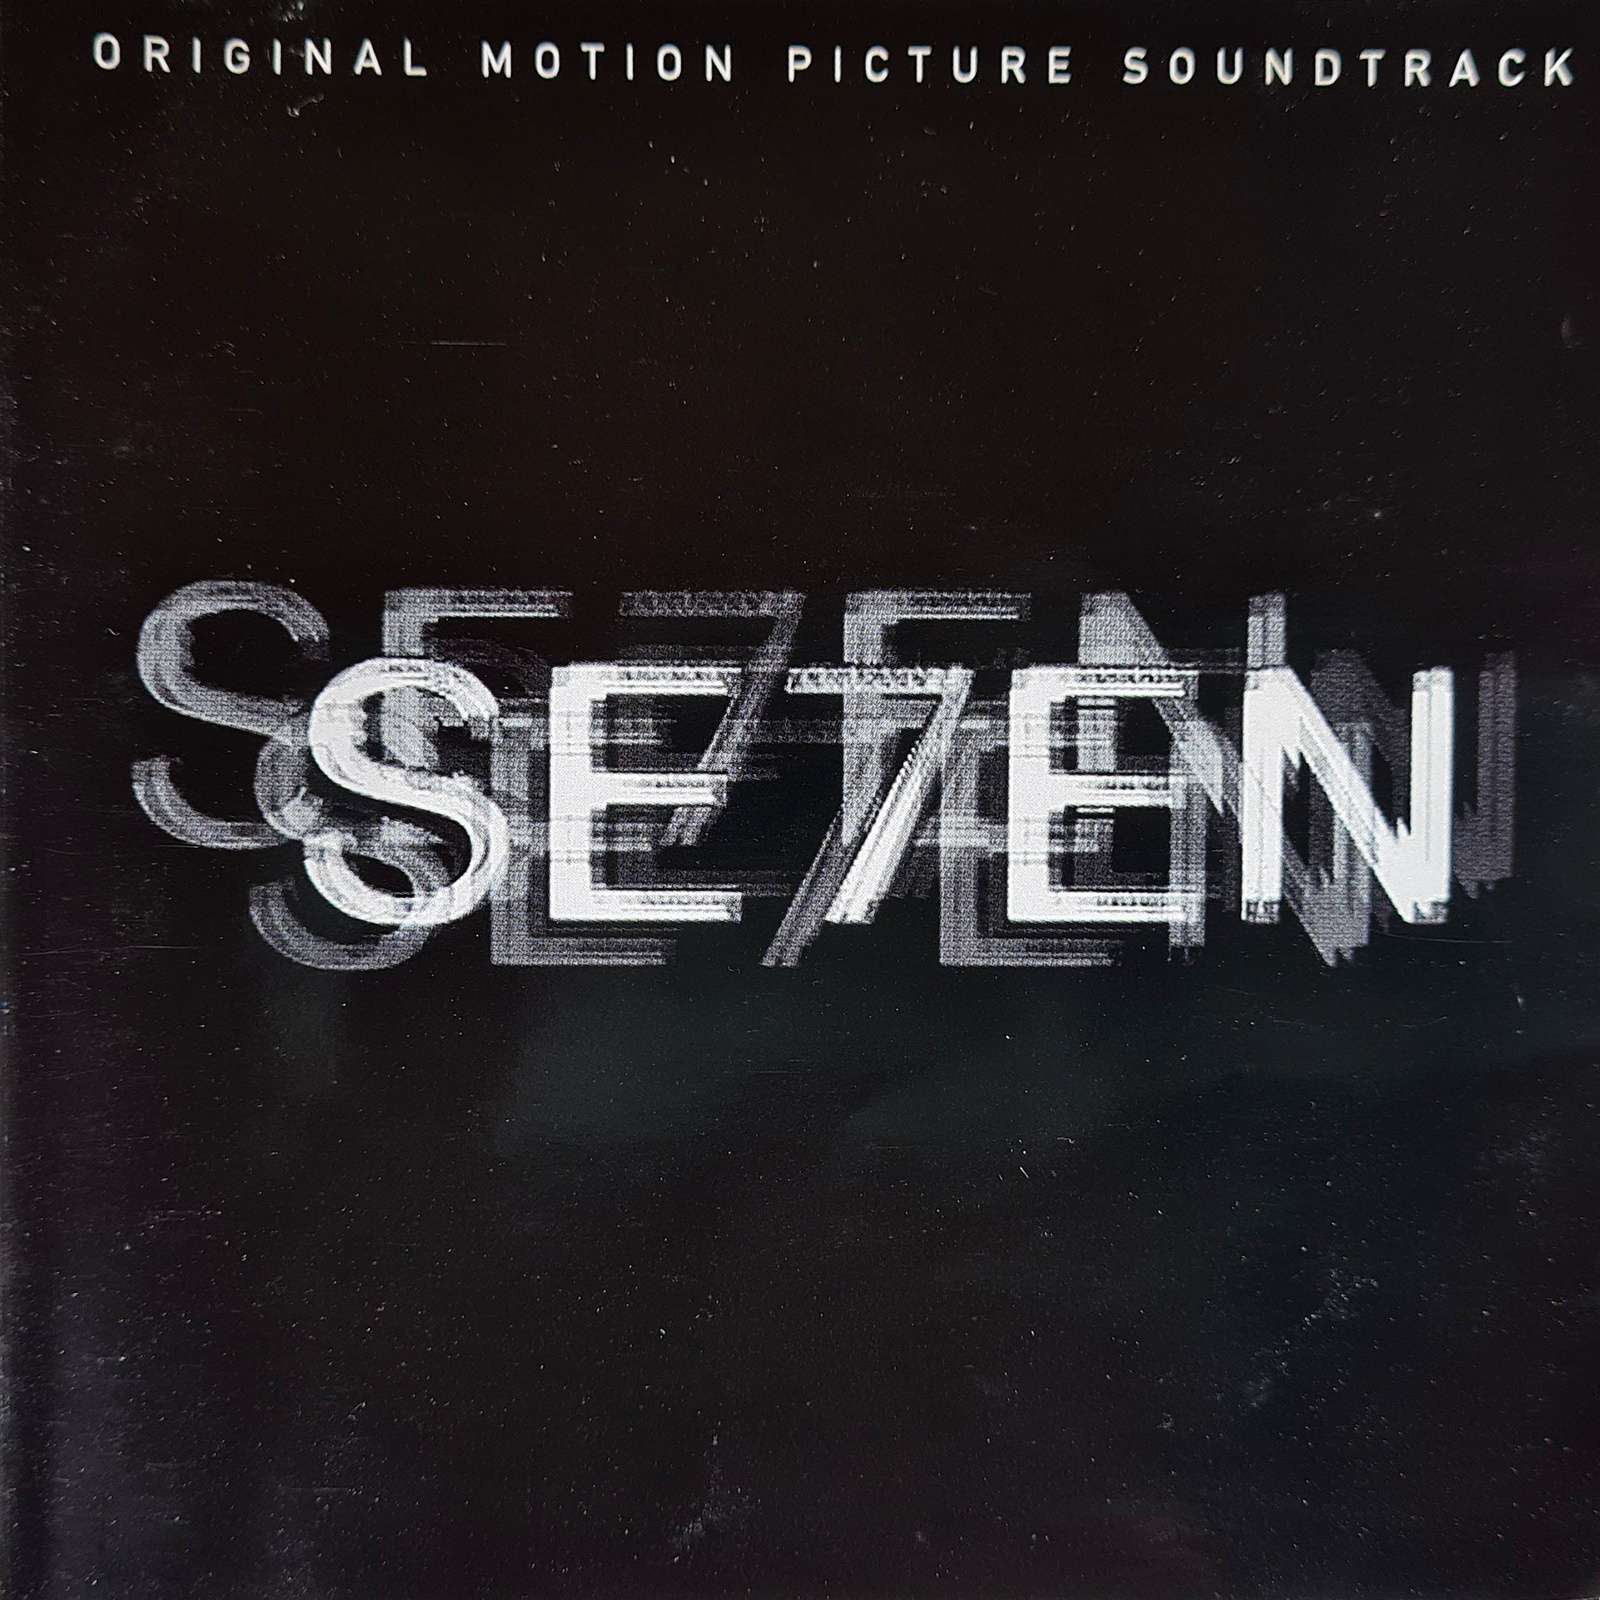 Seven - Original Motion Picture Soundtrack (CD)